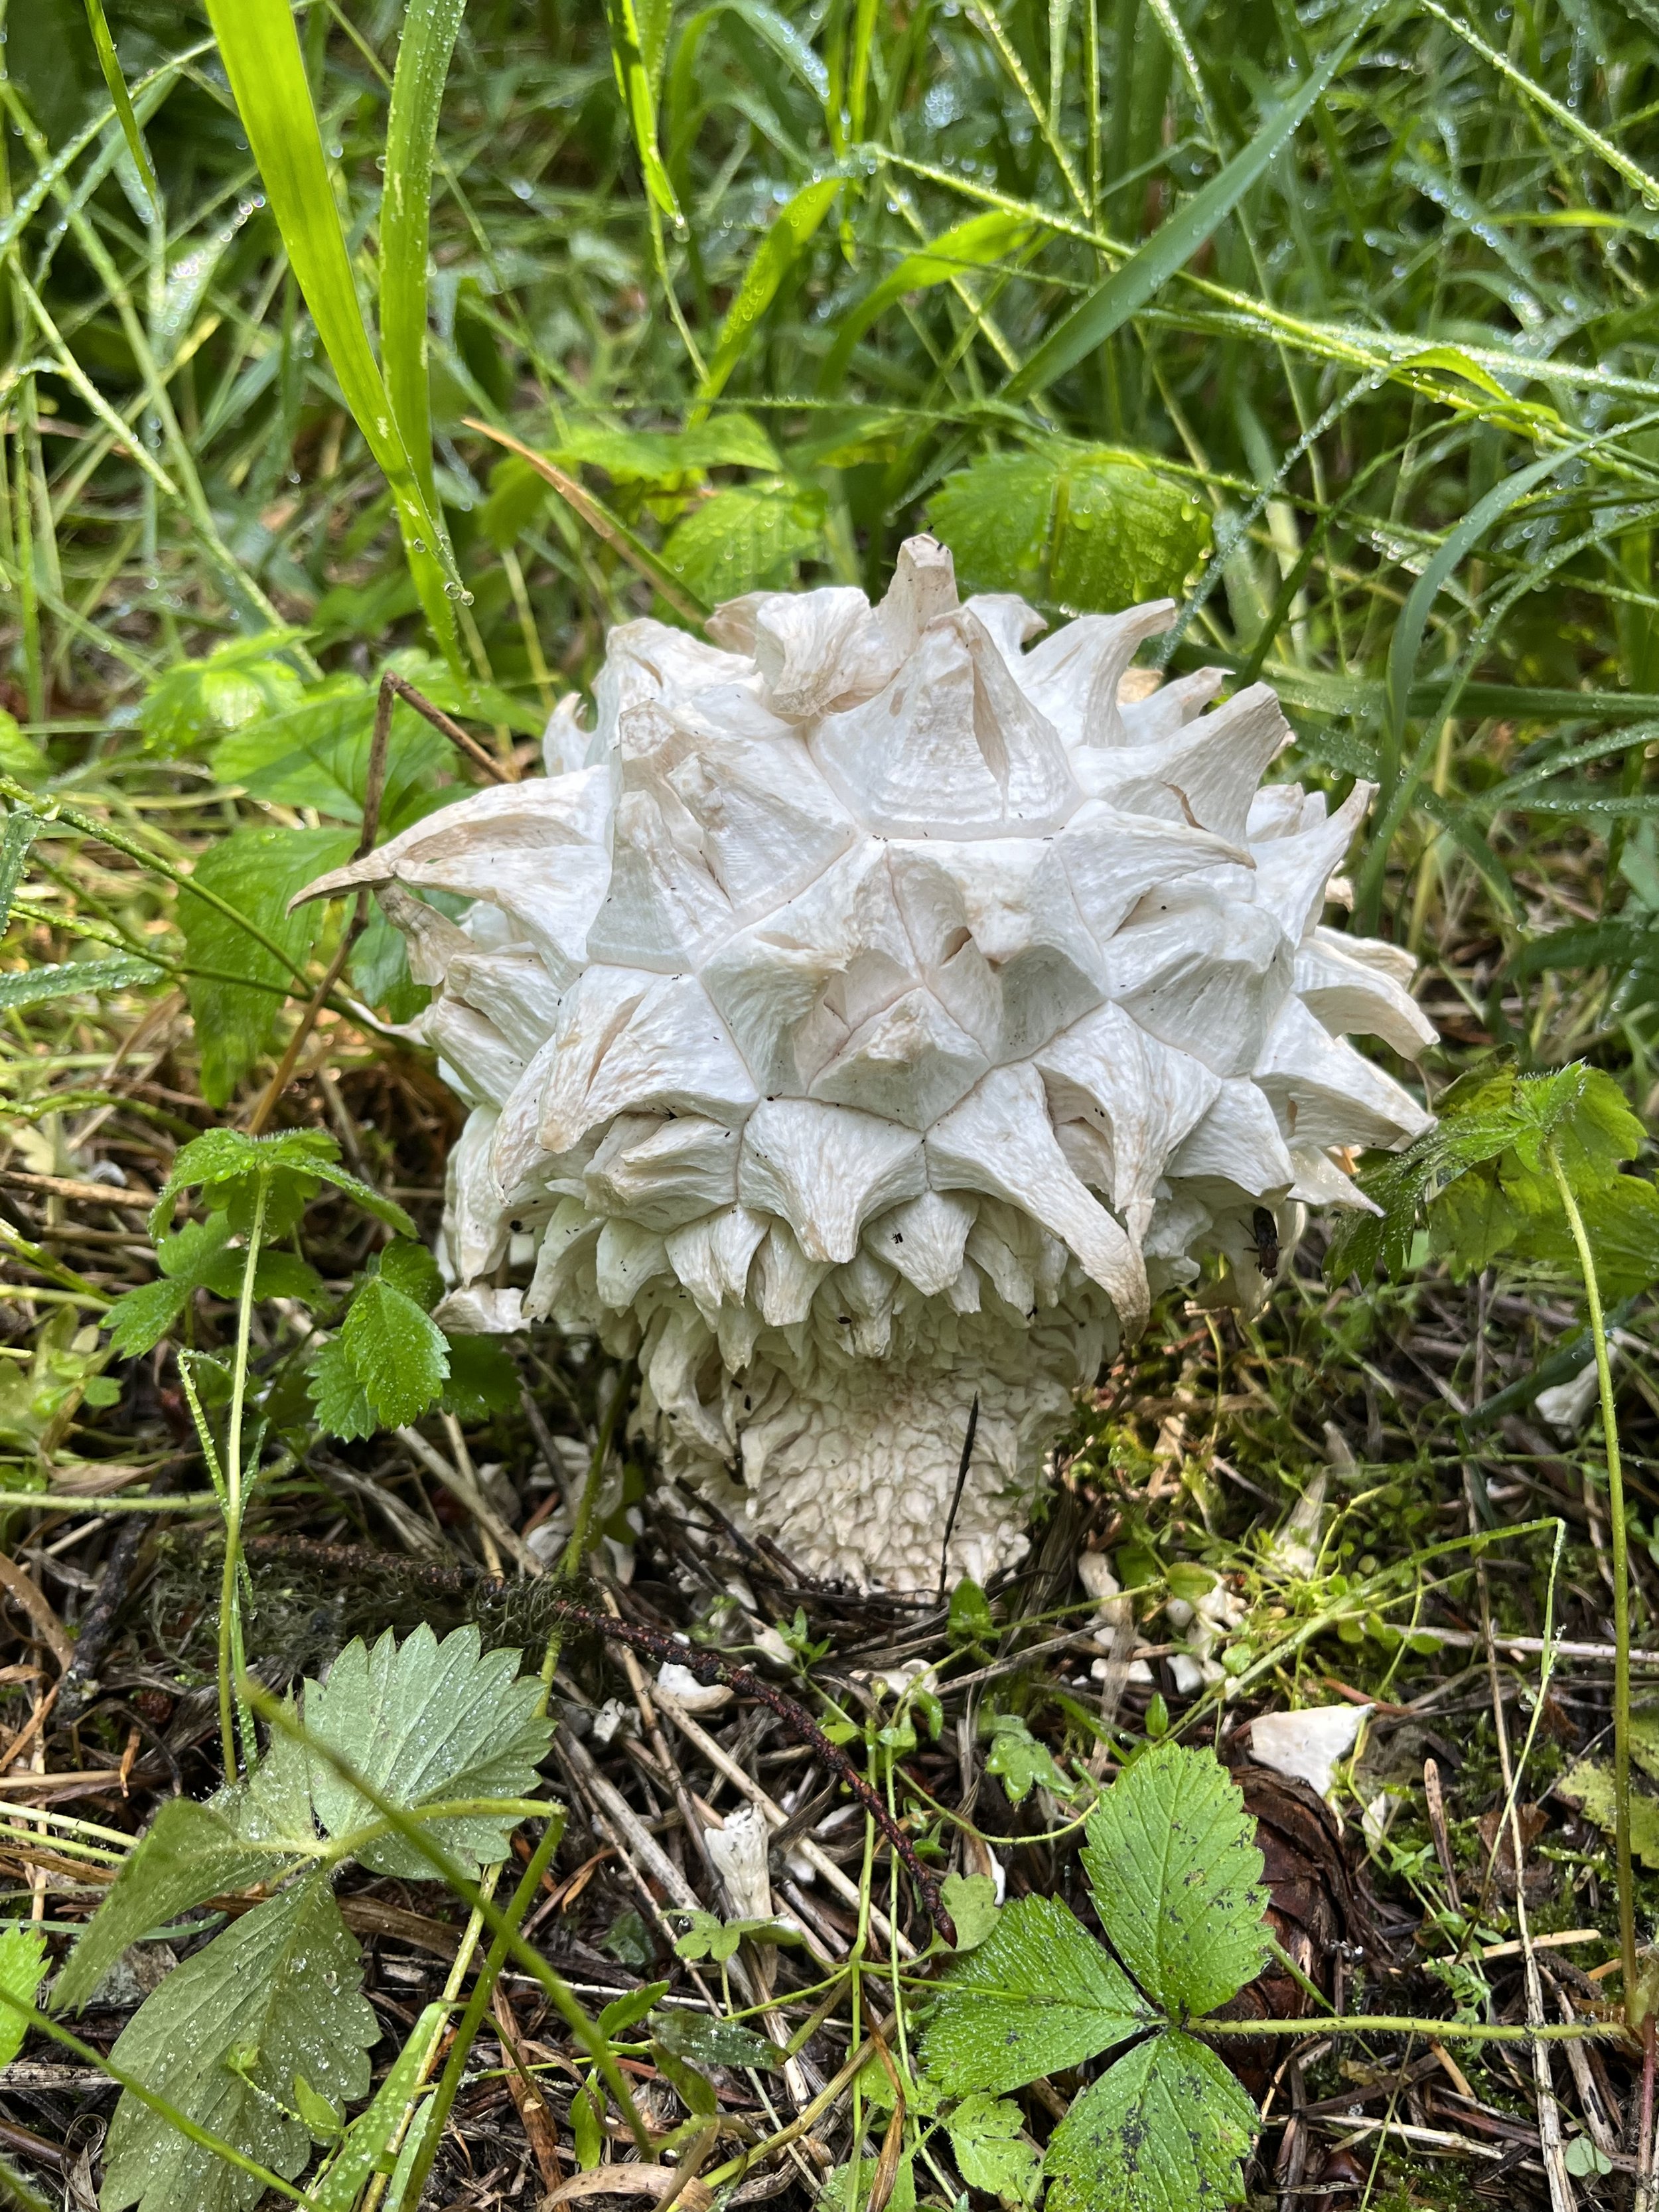  A sculpted puffball mushroom 